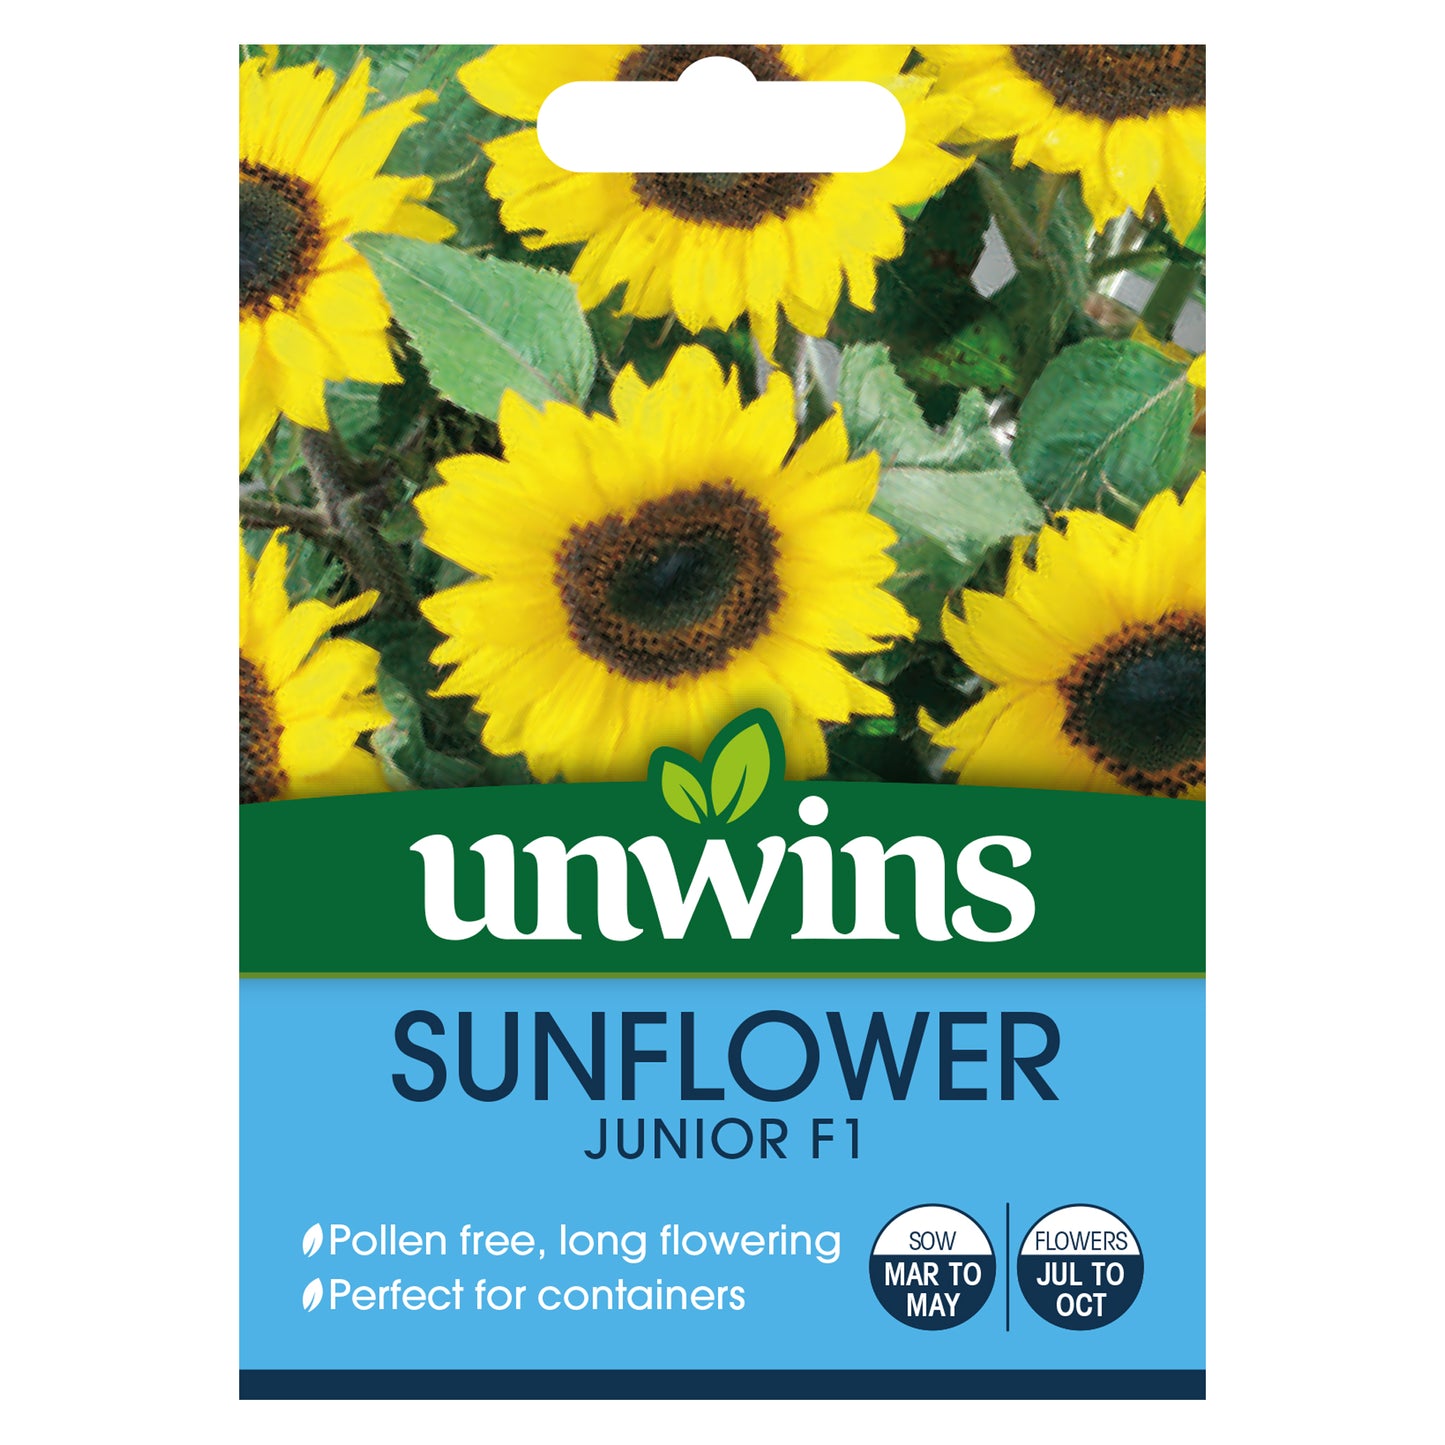 Unwins Sunflower Junior F1 Seeds front of pack